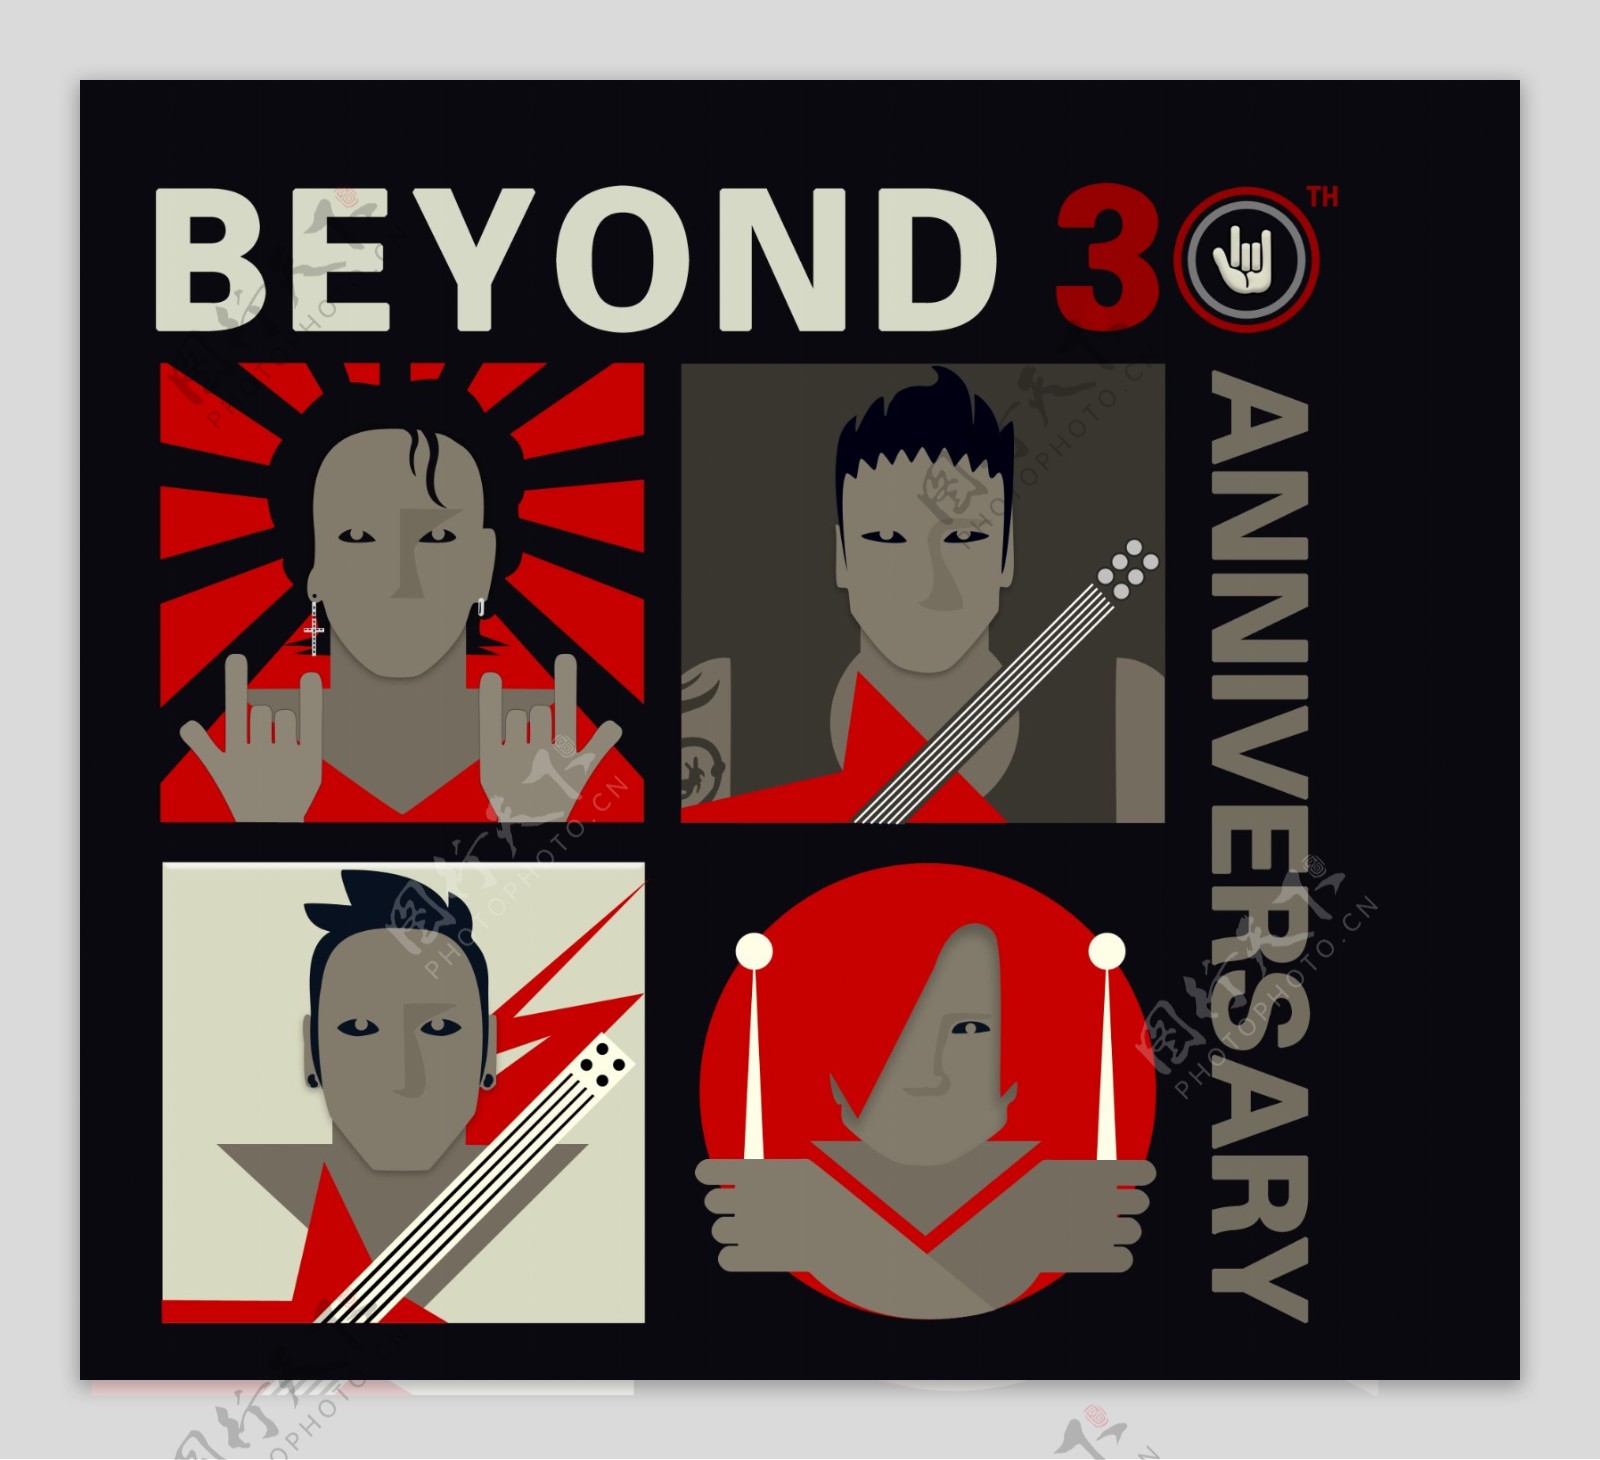 BEYOND乐队卡通封面图片